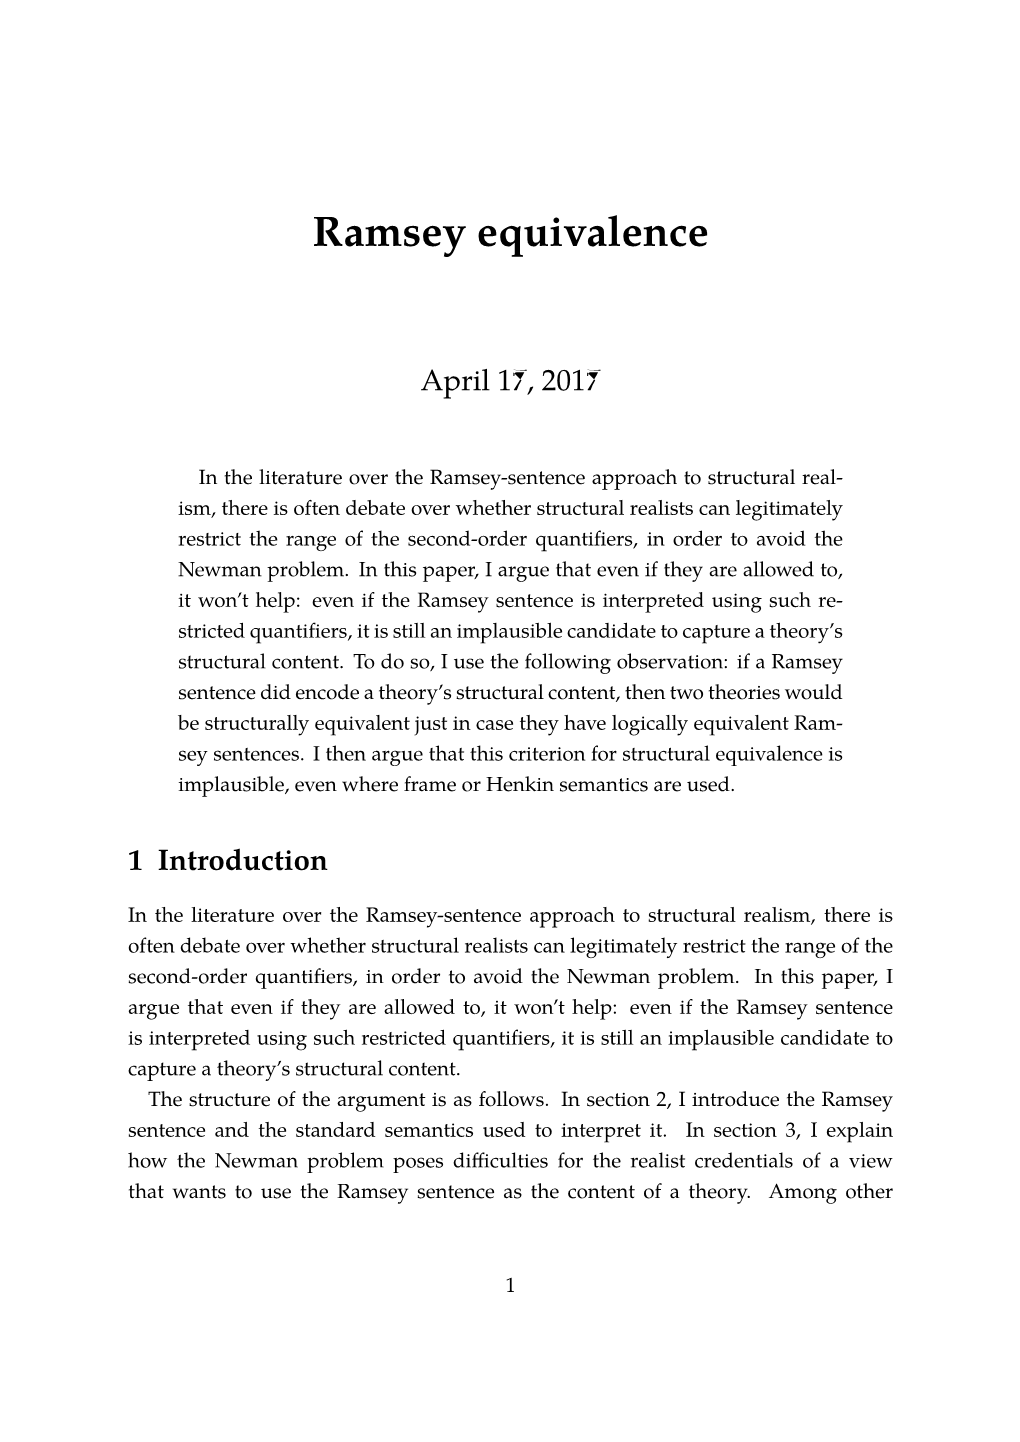 Ramsey Equivalence